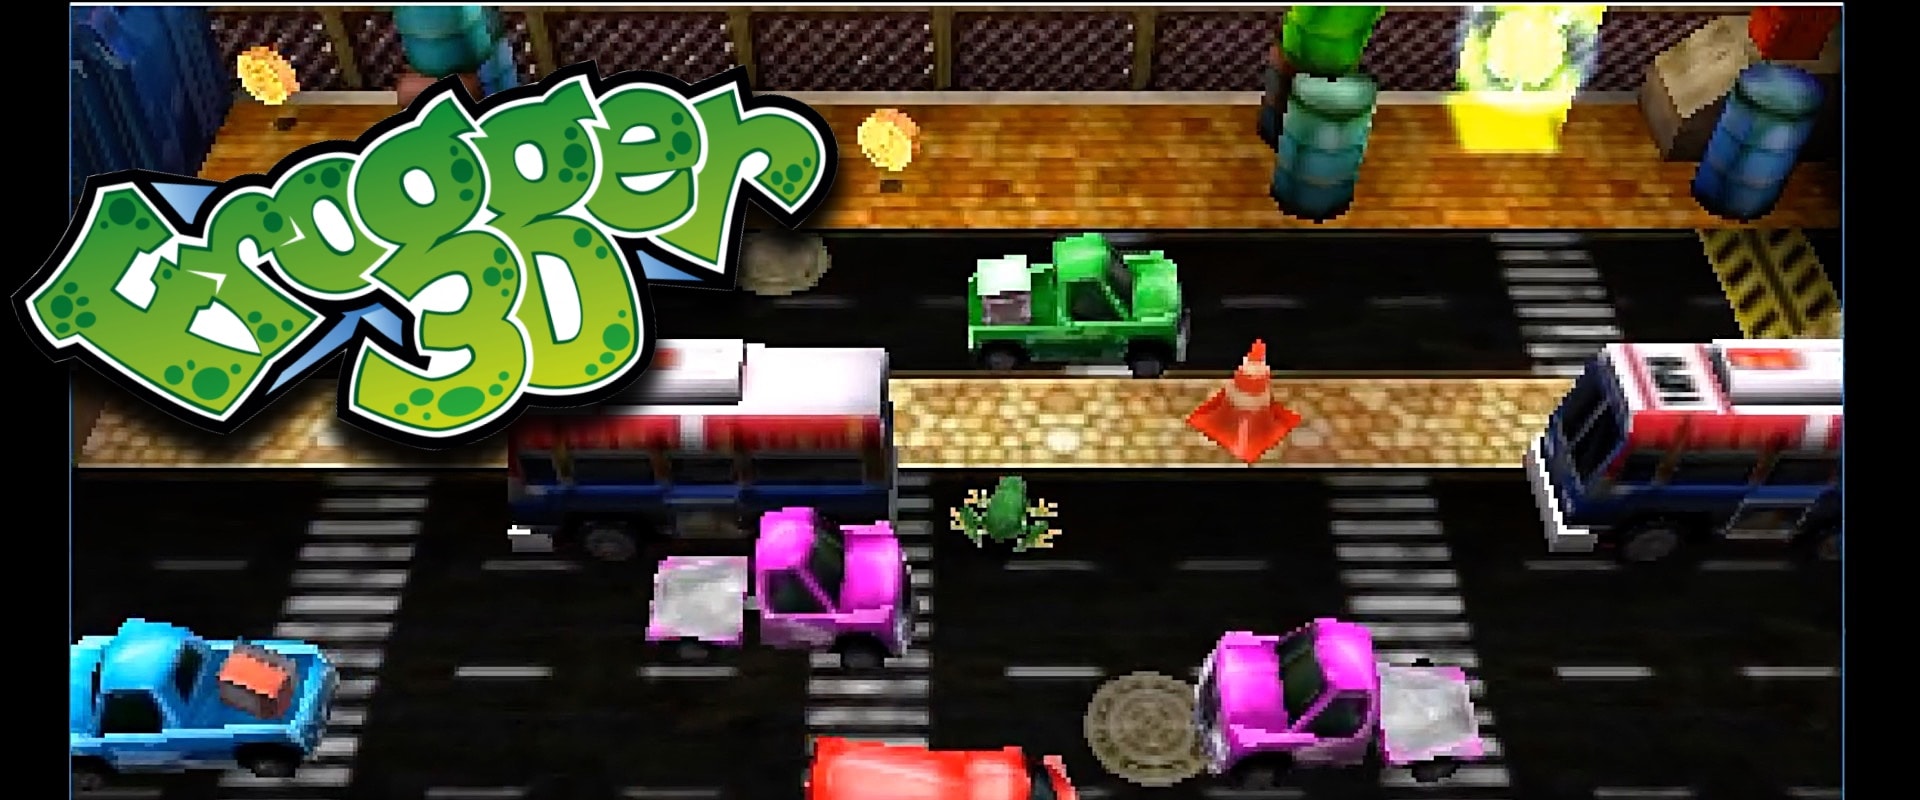 Exploring Frogger: A Retro Video Game Classic